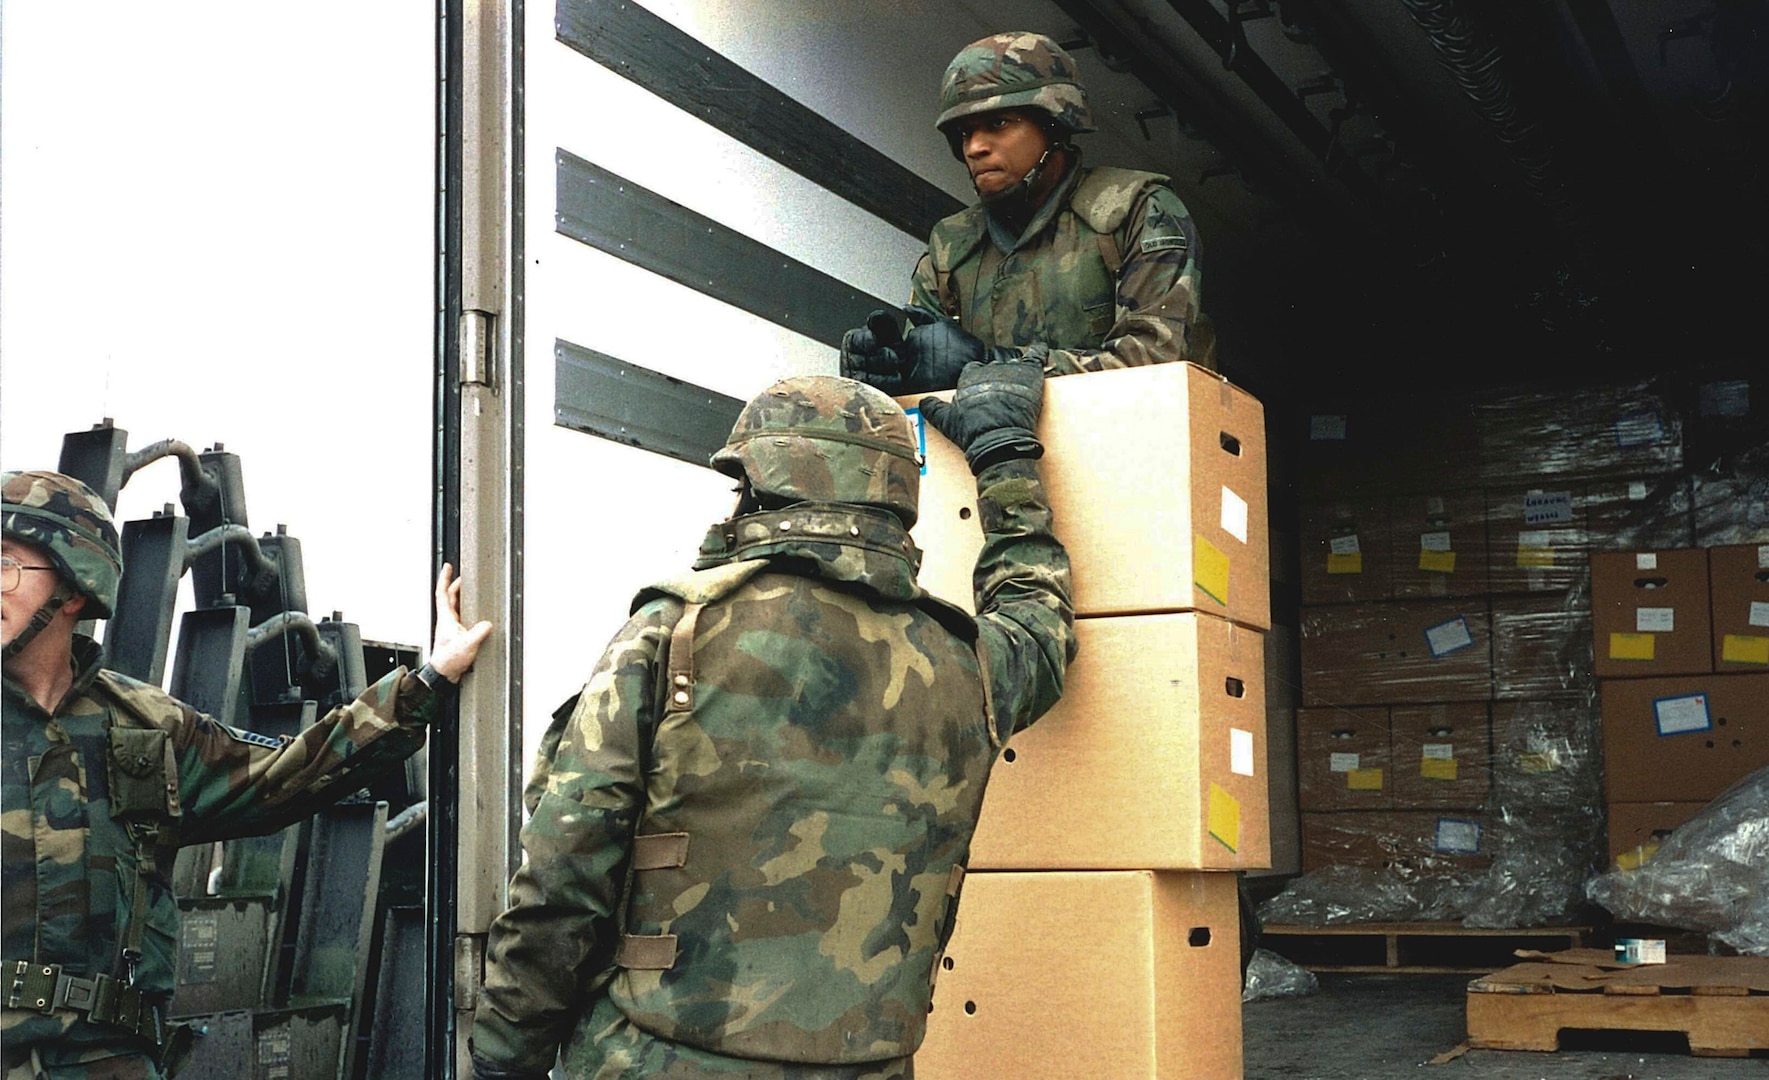 Prime vendor delivers fresh eggs to U.S. troops in Lukavee, Bosnia, Feb. 17, 1996.